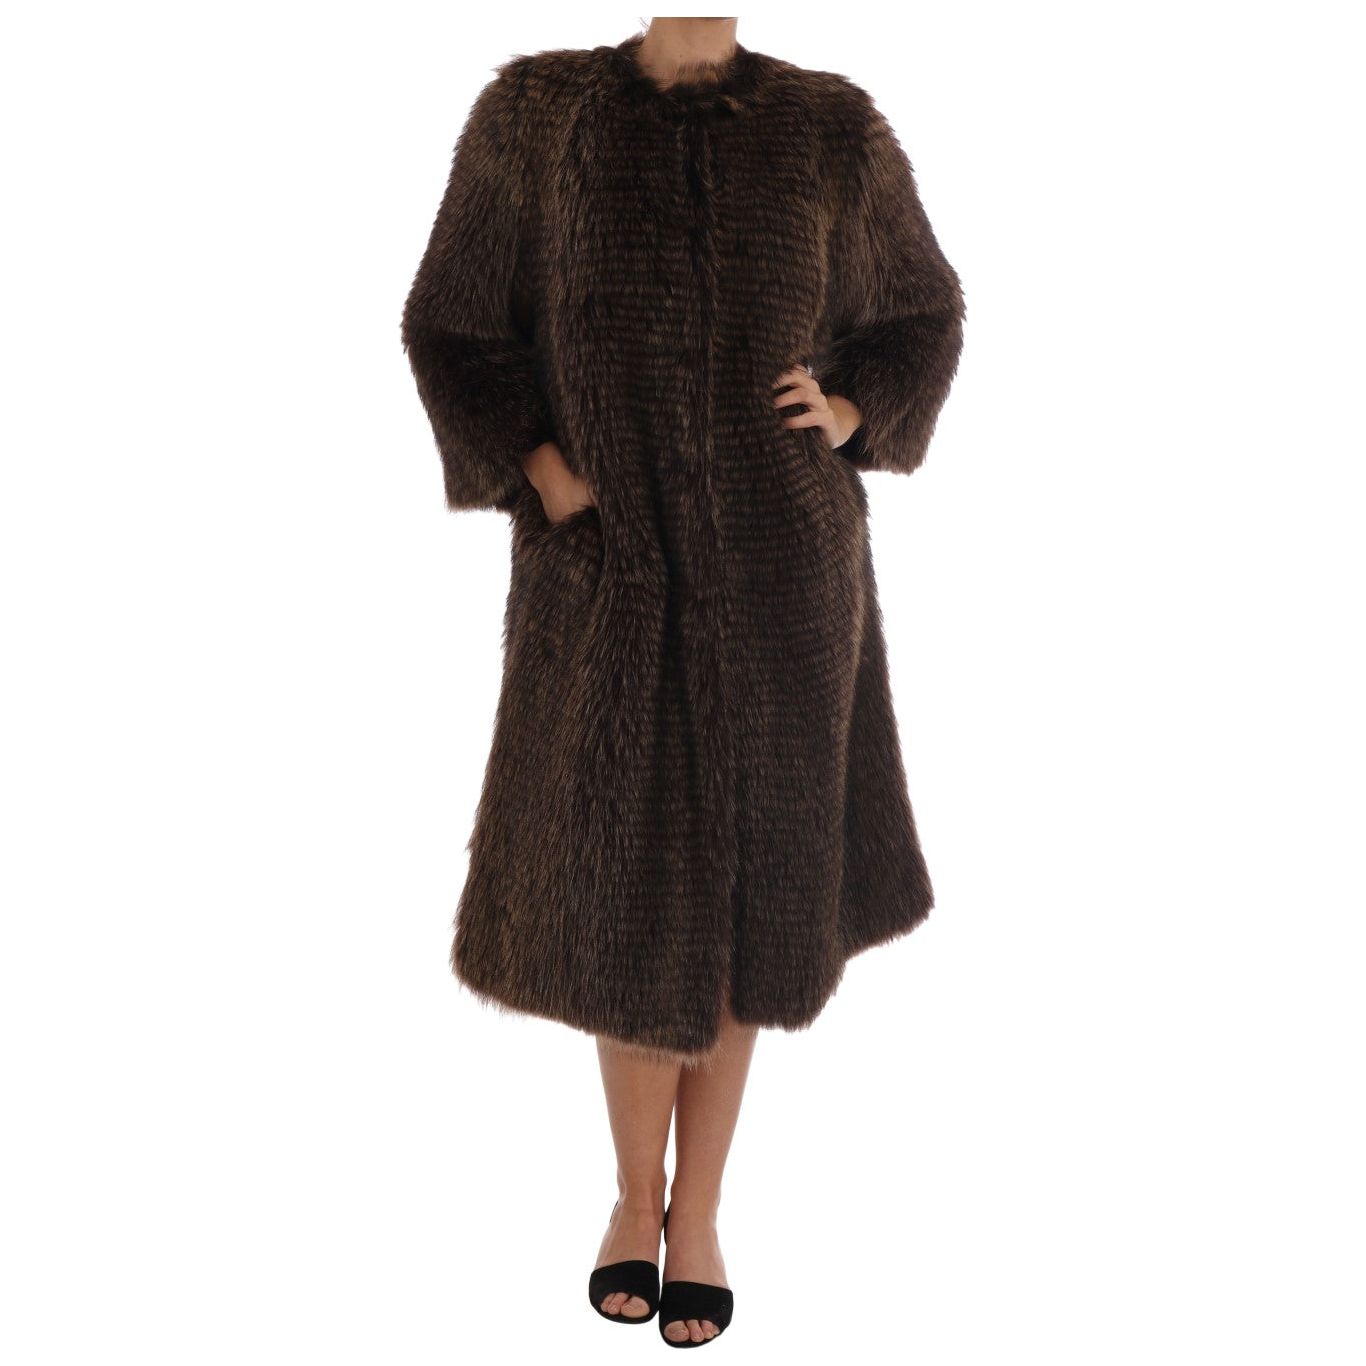 Dolce & Gabbana Elegant Brown Raccoon Fur Knee-Length Coat Coats & Jackets brown-raccoon-fur-coat-jacket 513000-brown-raccoon-fur-coat-jacket.jpg